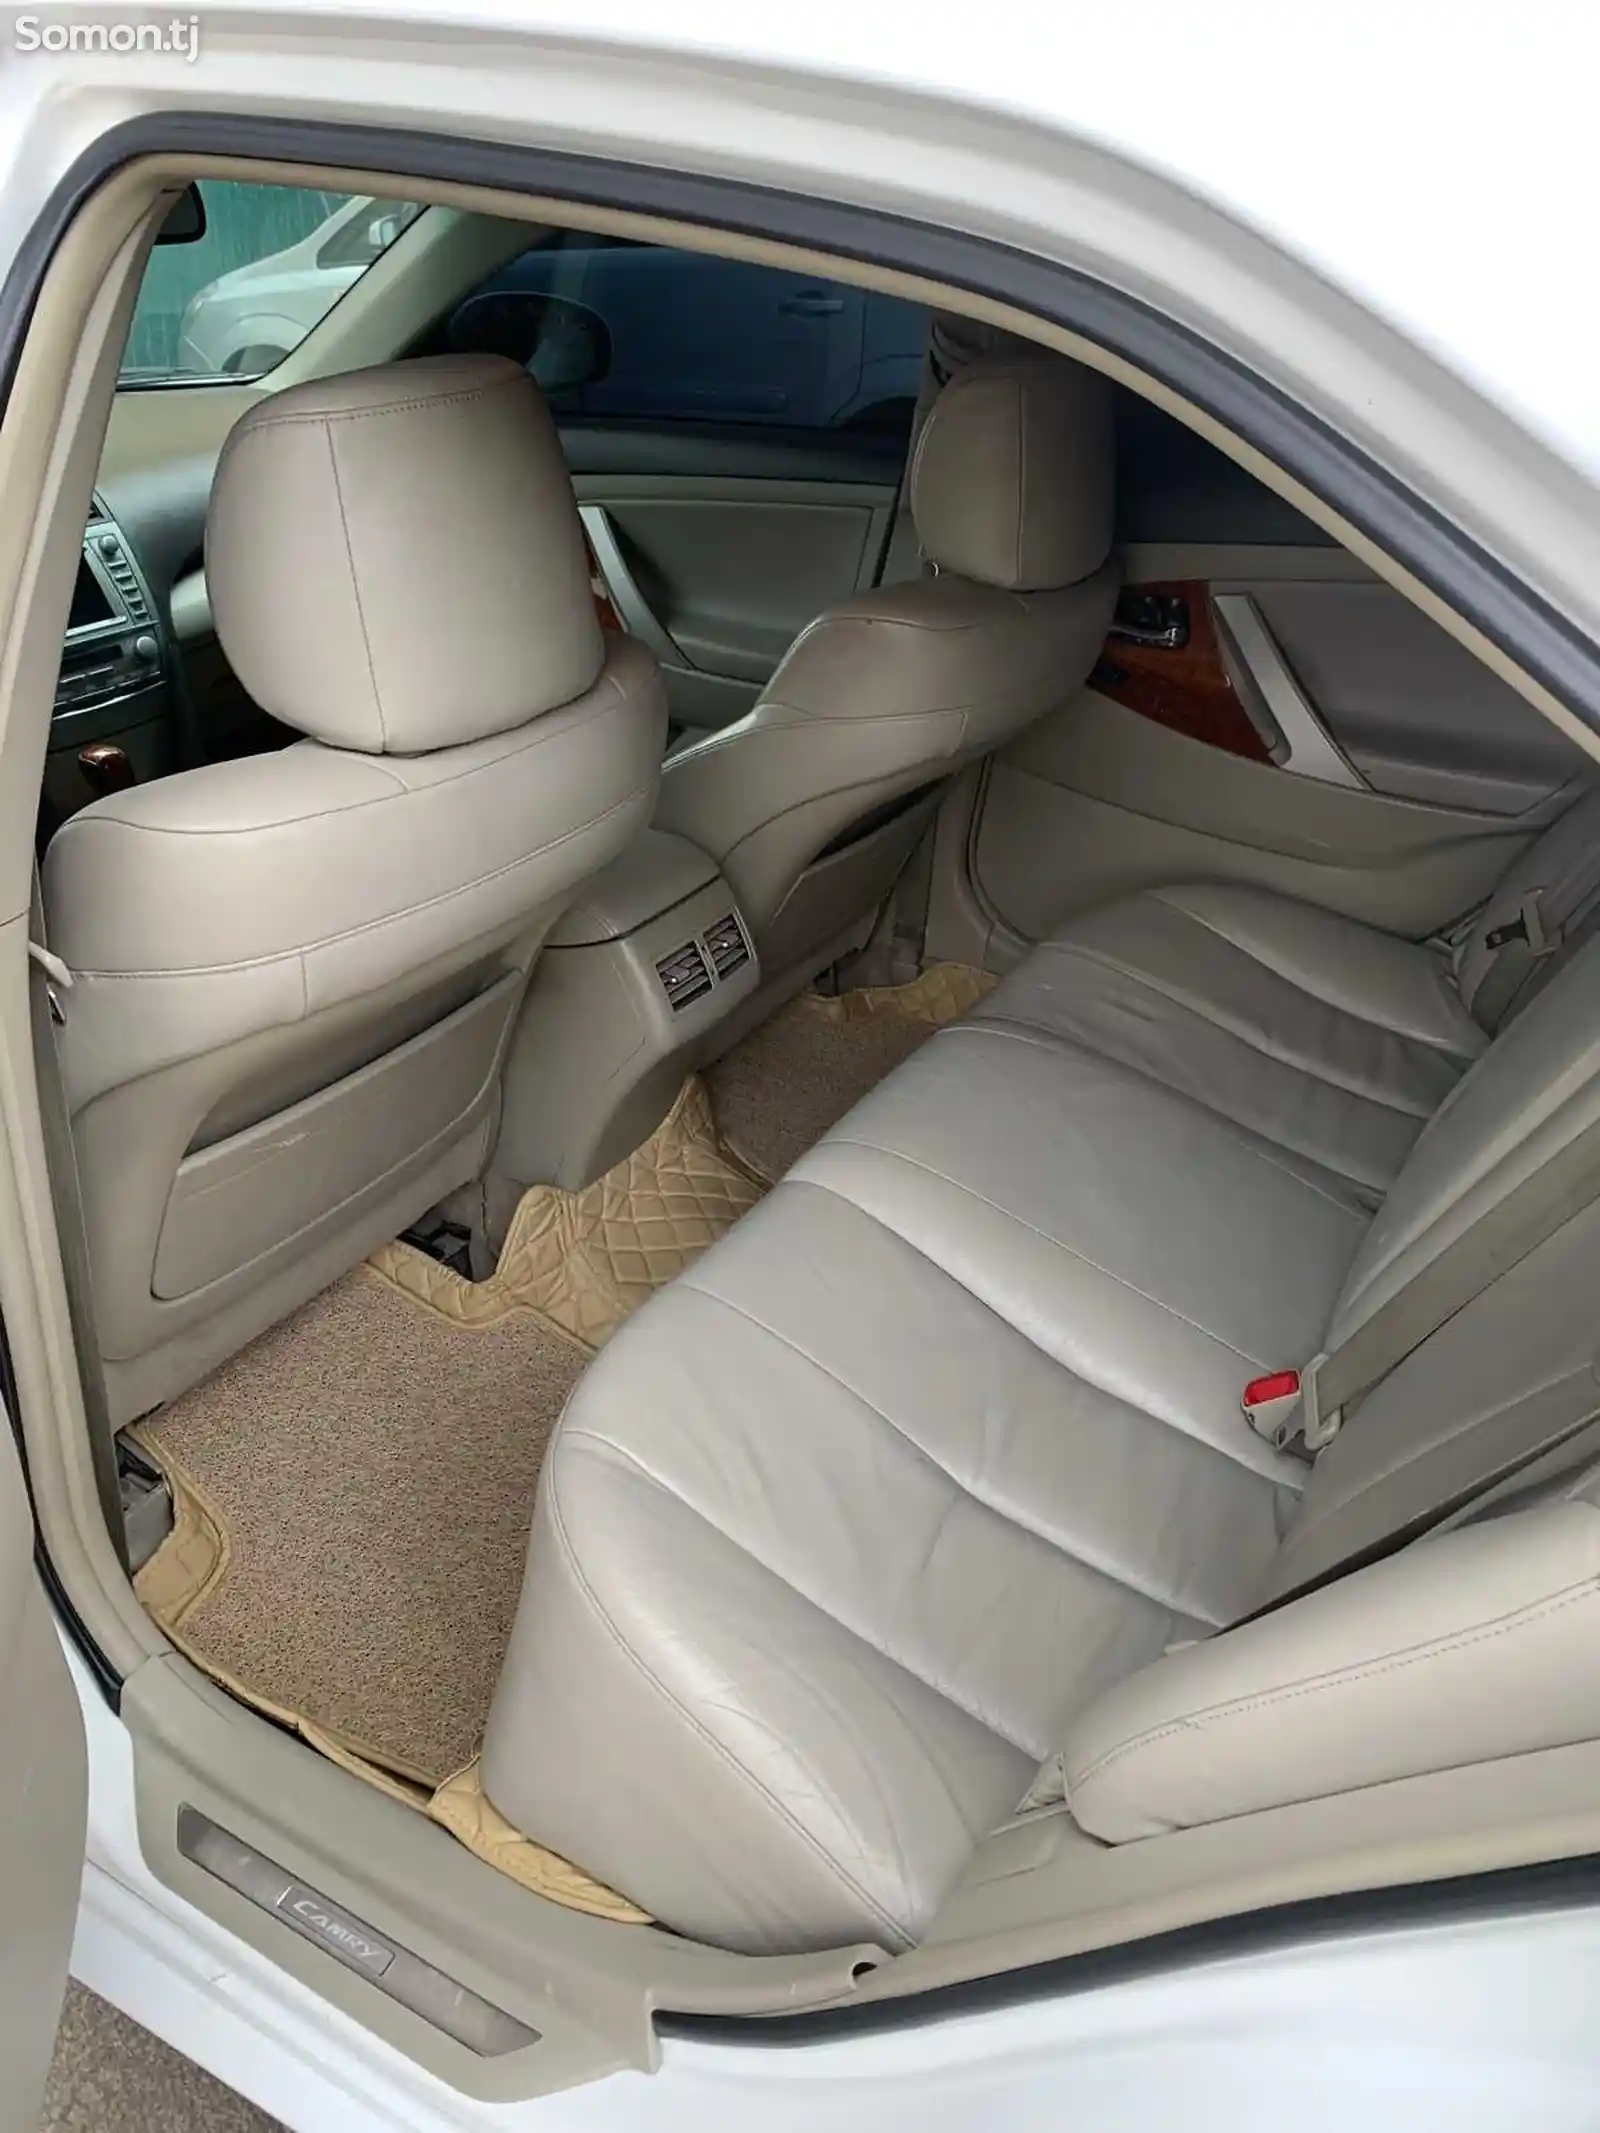 Toyota Camry, 2010-2